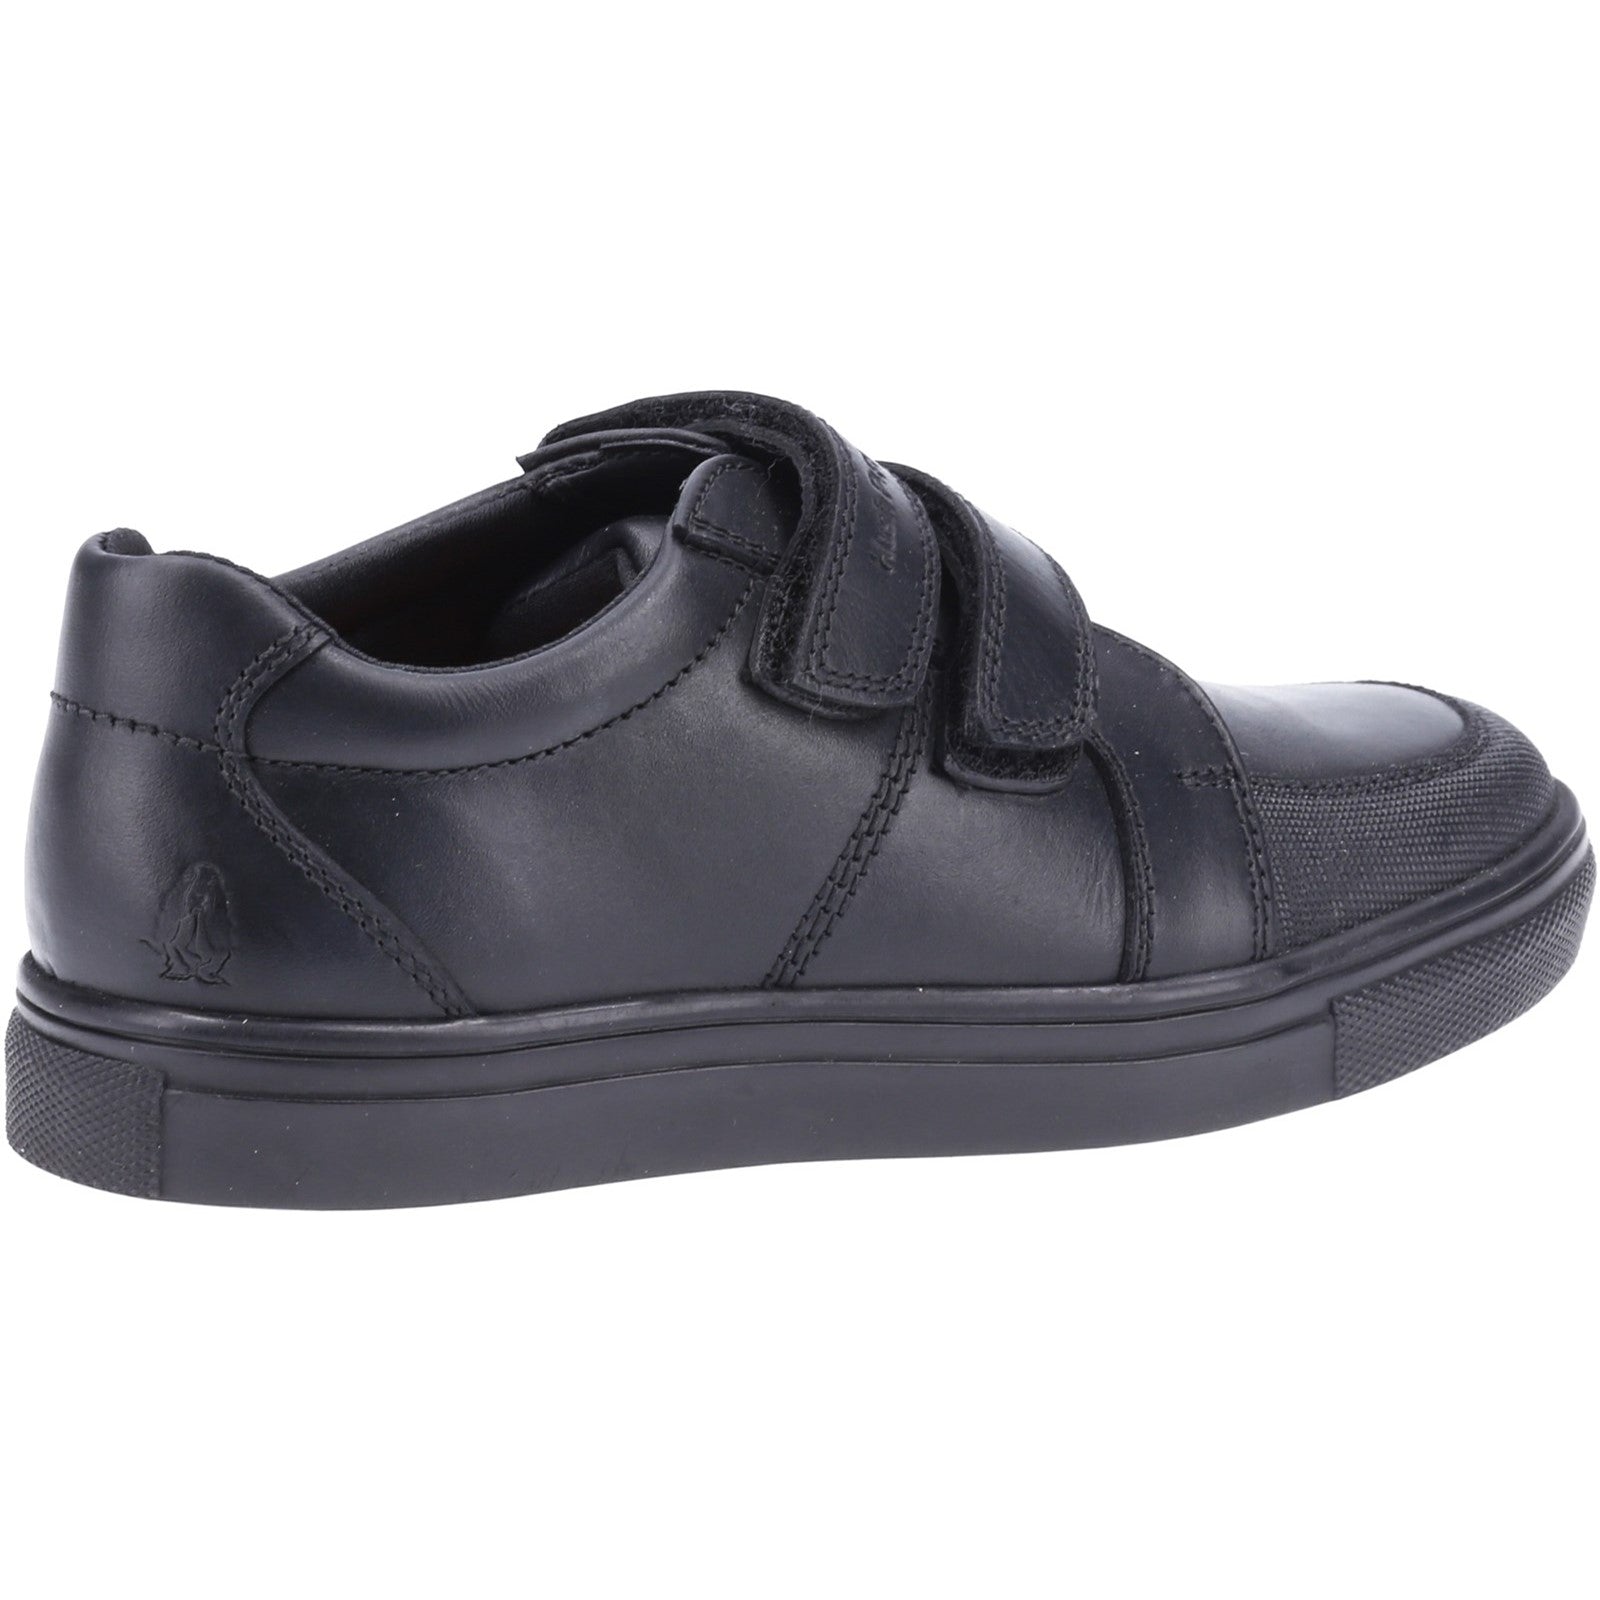 Hush Puppies Boys Santos Leather School Shoes - Black